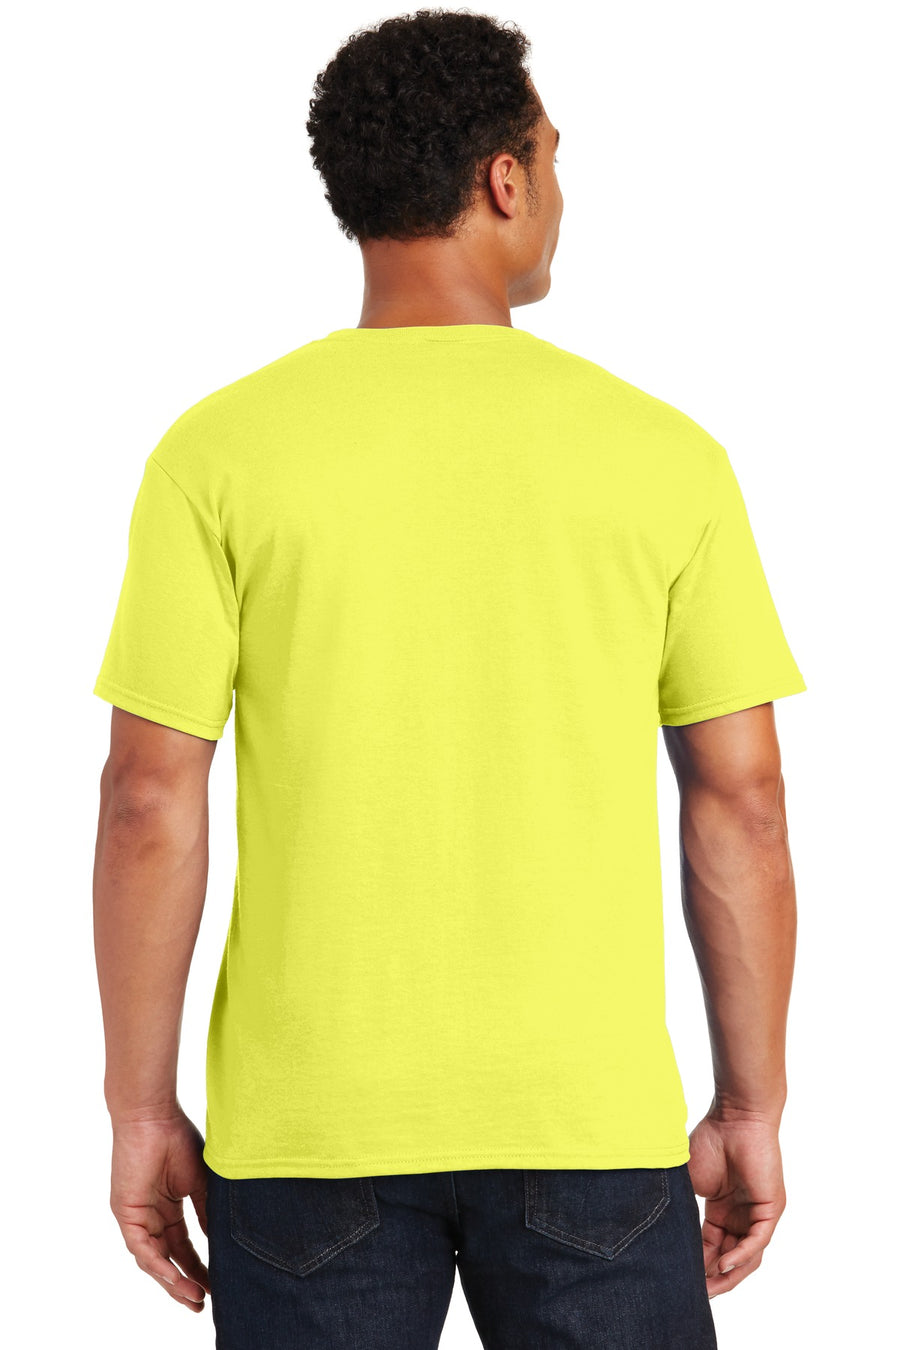 29M-Neon Yellow-back_model